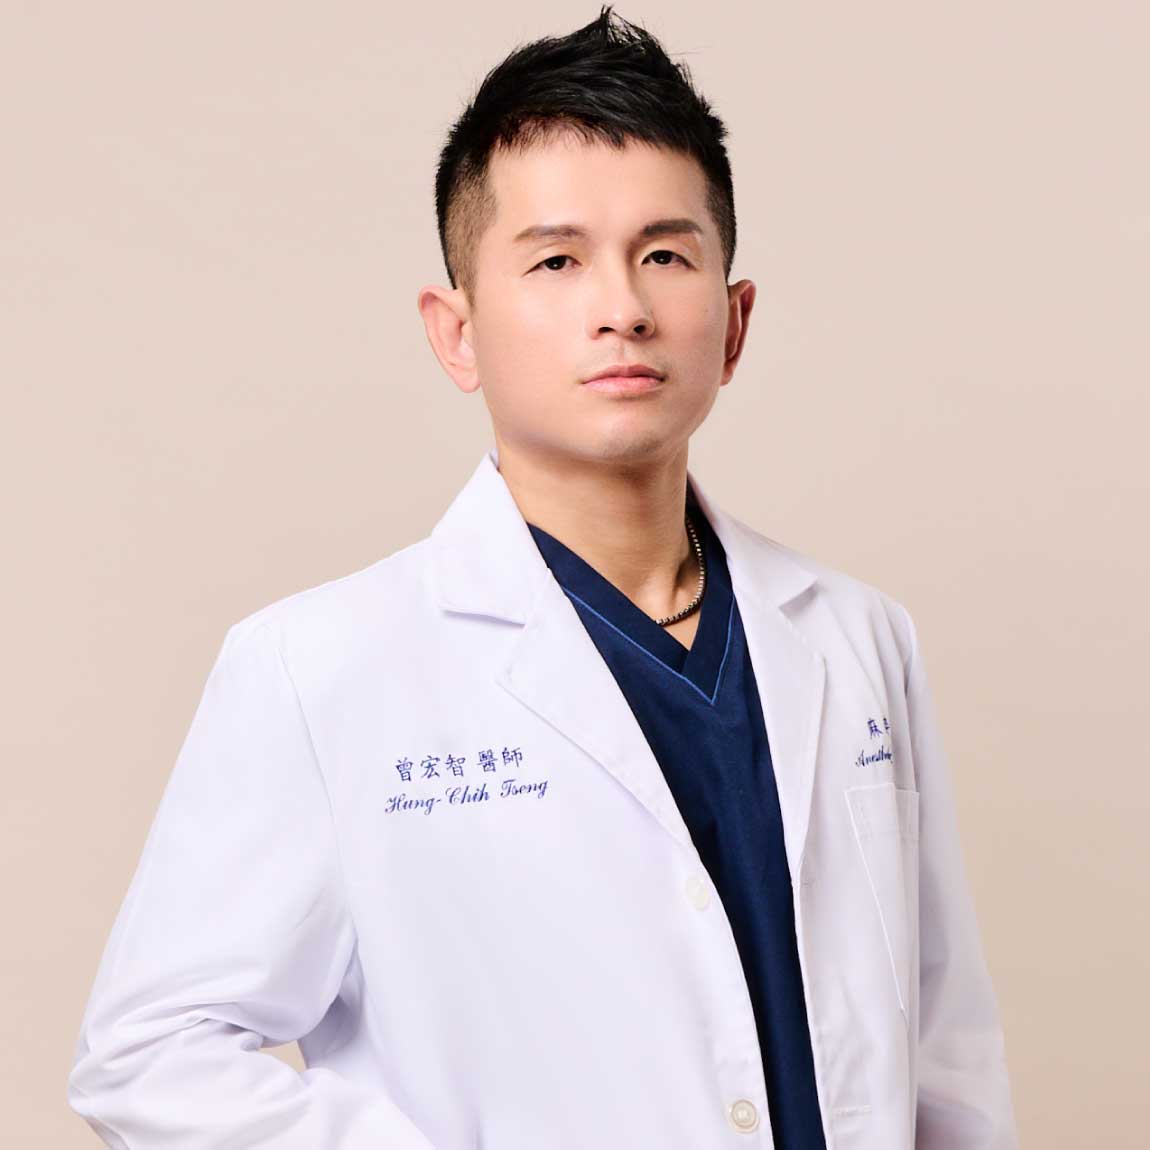 曾宏智 Hung-chih Tseng, 麻醉醫師.